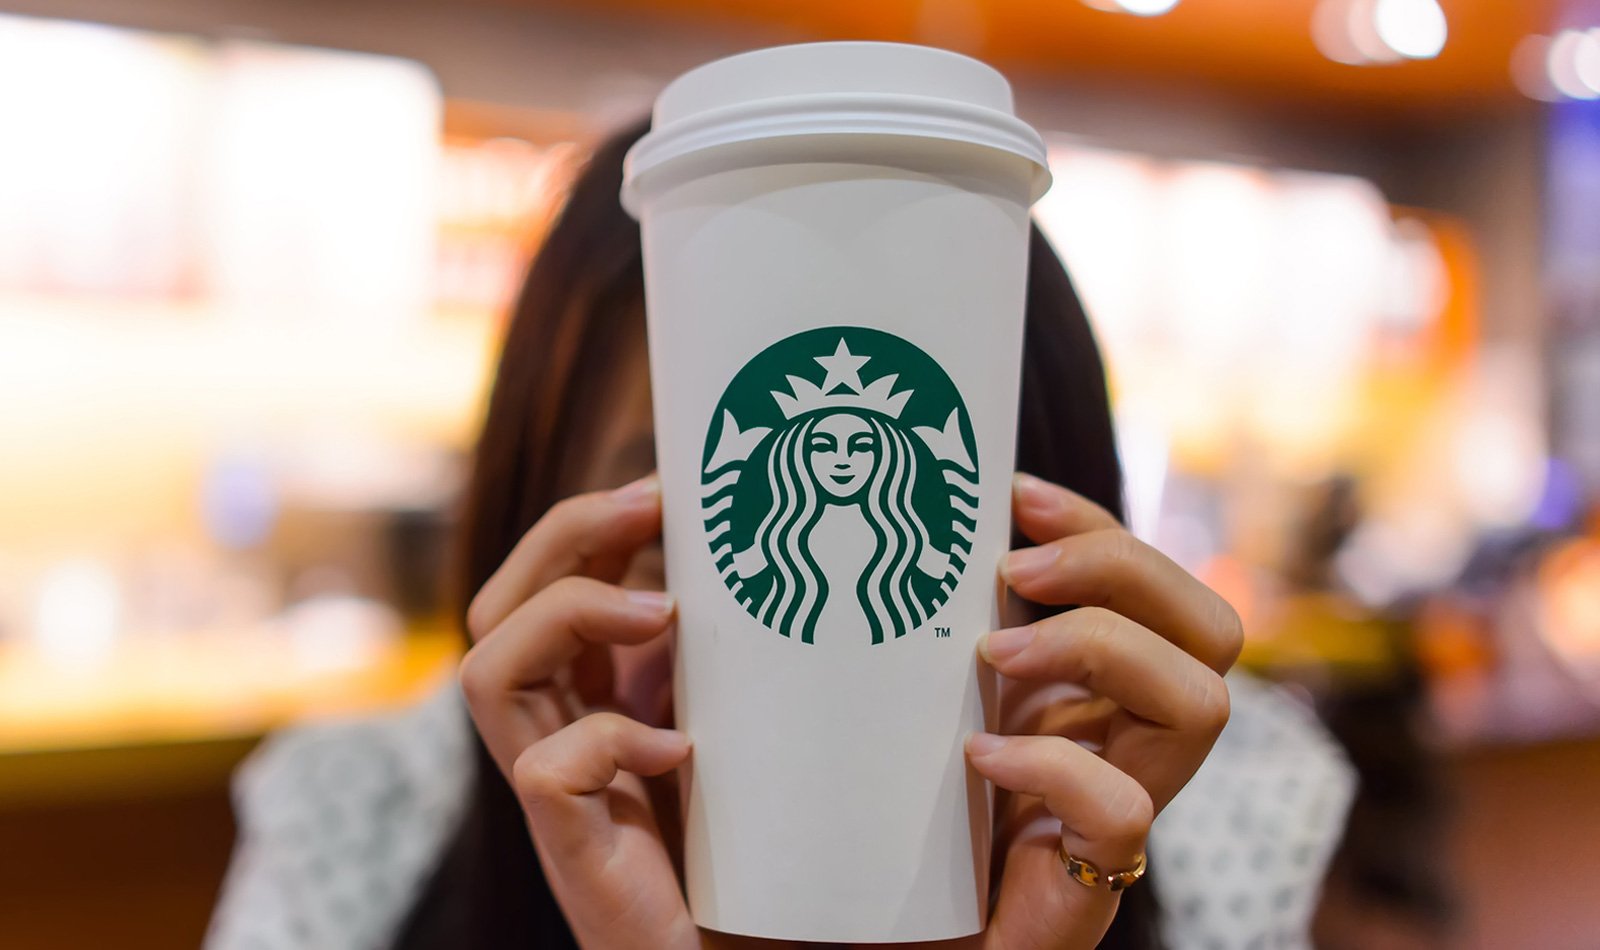 Woman holding a Starbucks coffee